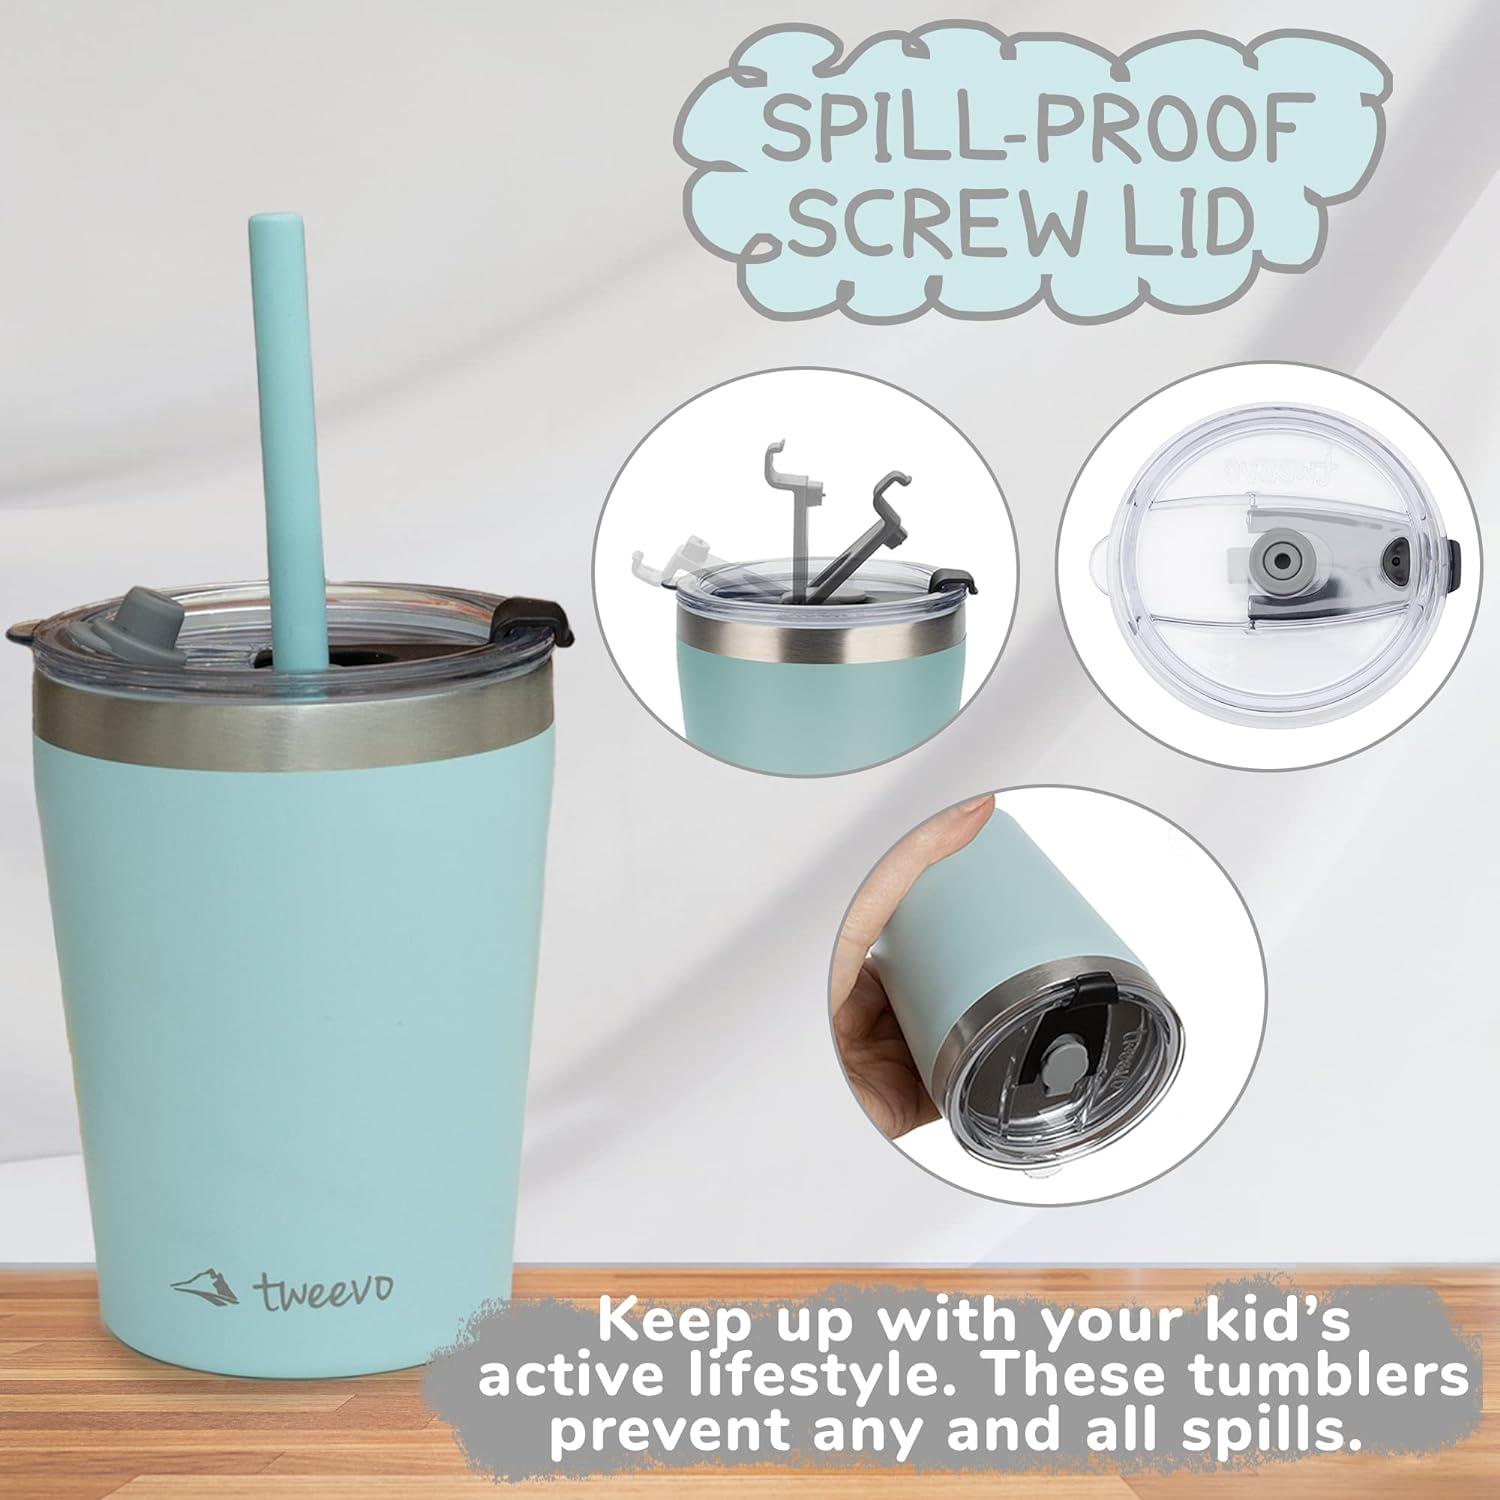 Tweevo Kids Tumblers with Spill-Proof Screw Lids - Tumbler 8.5 oz